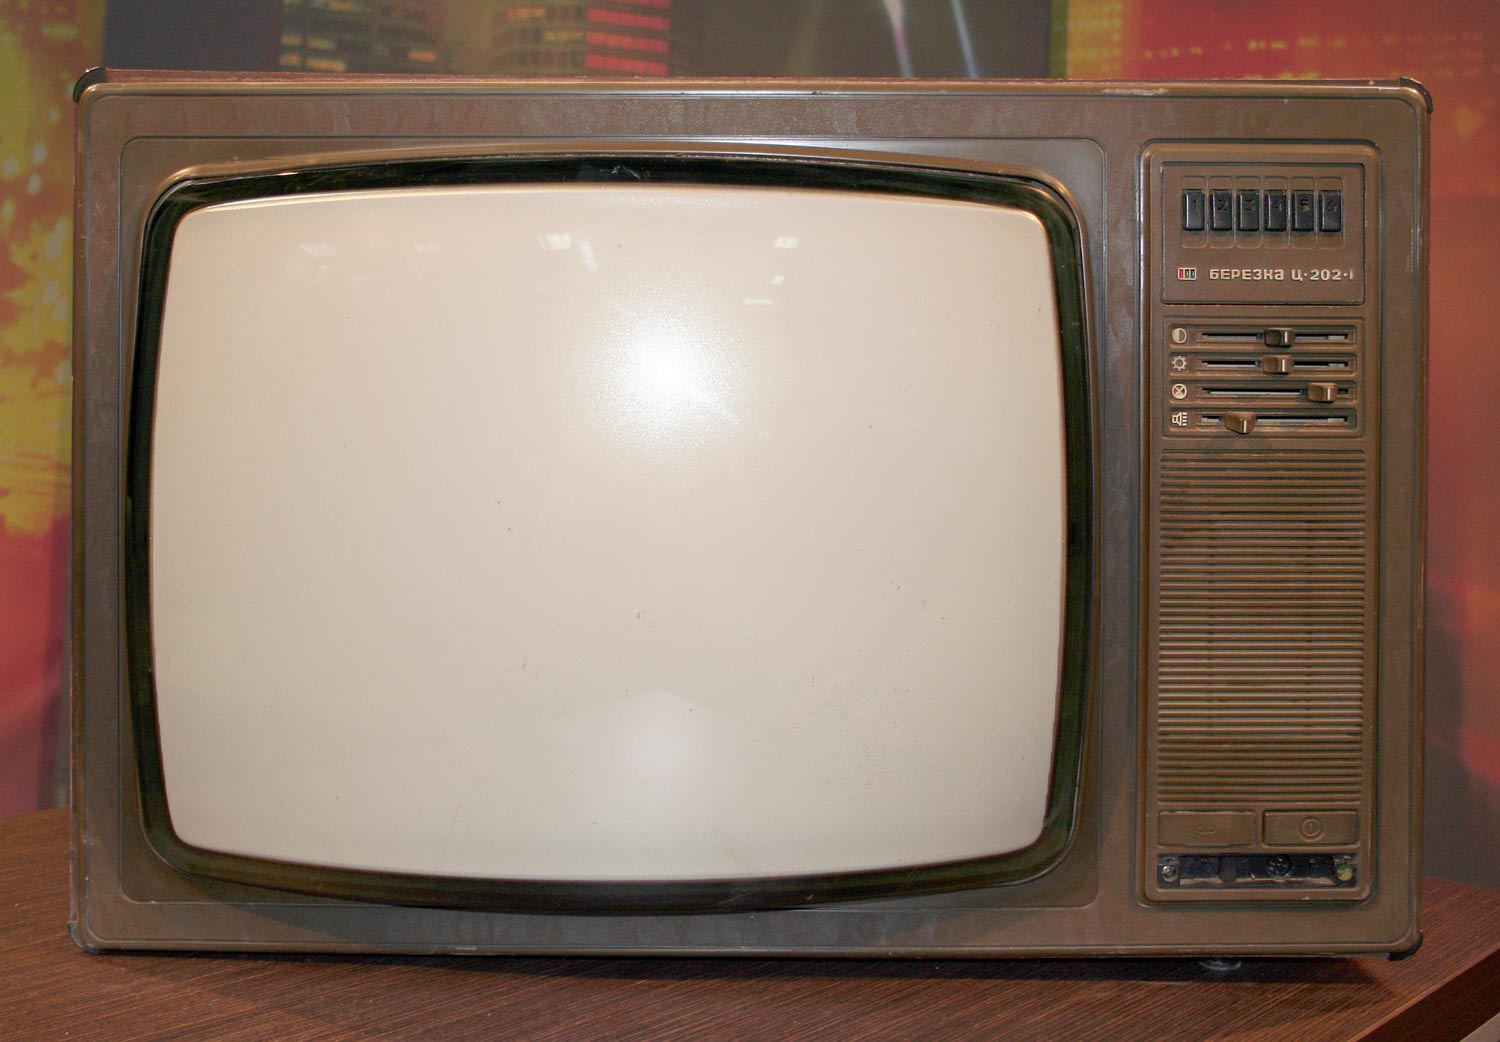 Куплю телевизор старый оскол. Телевизор Березка 202. Березка ц 202-1. Телевизор Березка цветной. Телевизор Березка ц208 кинескоп.